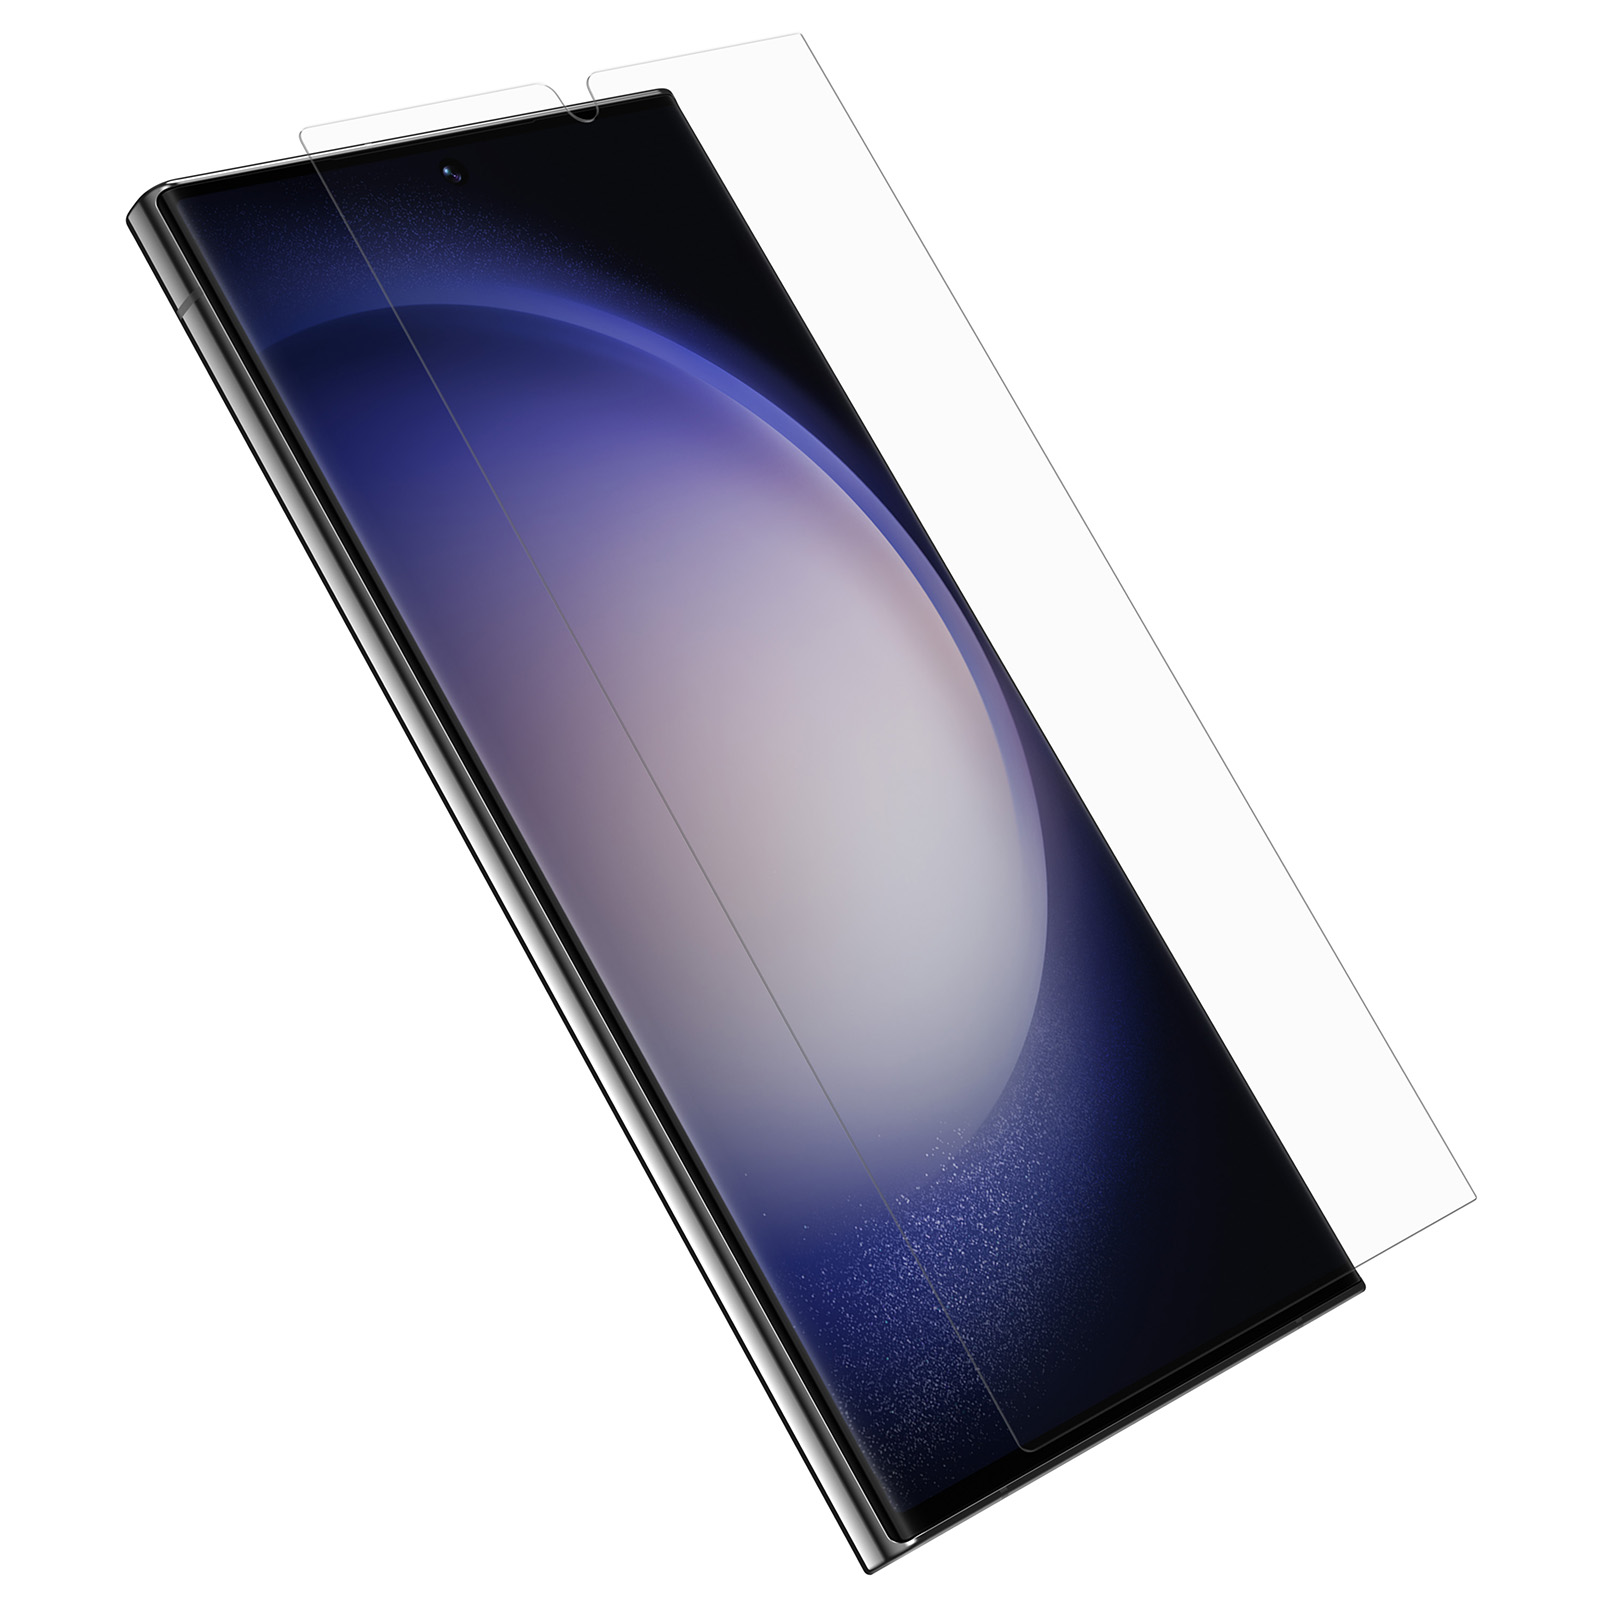 Protection écran et Camera pour Samsung Galaxy S23 Ultra 3+3